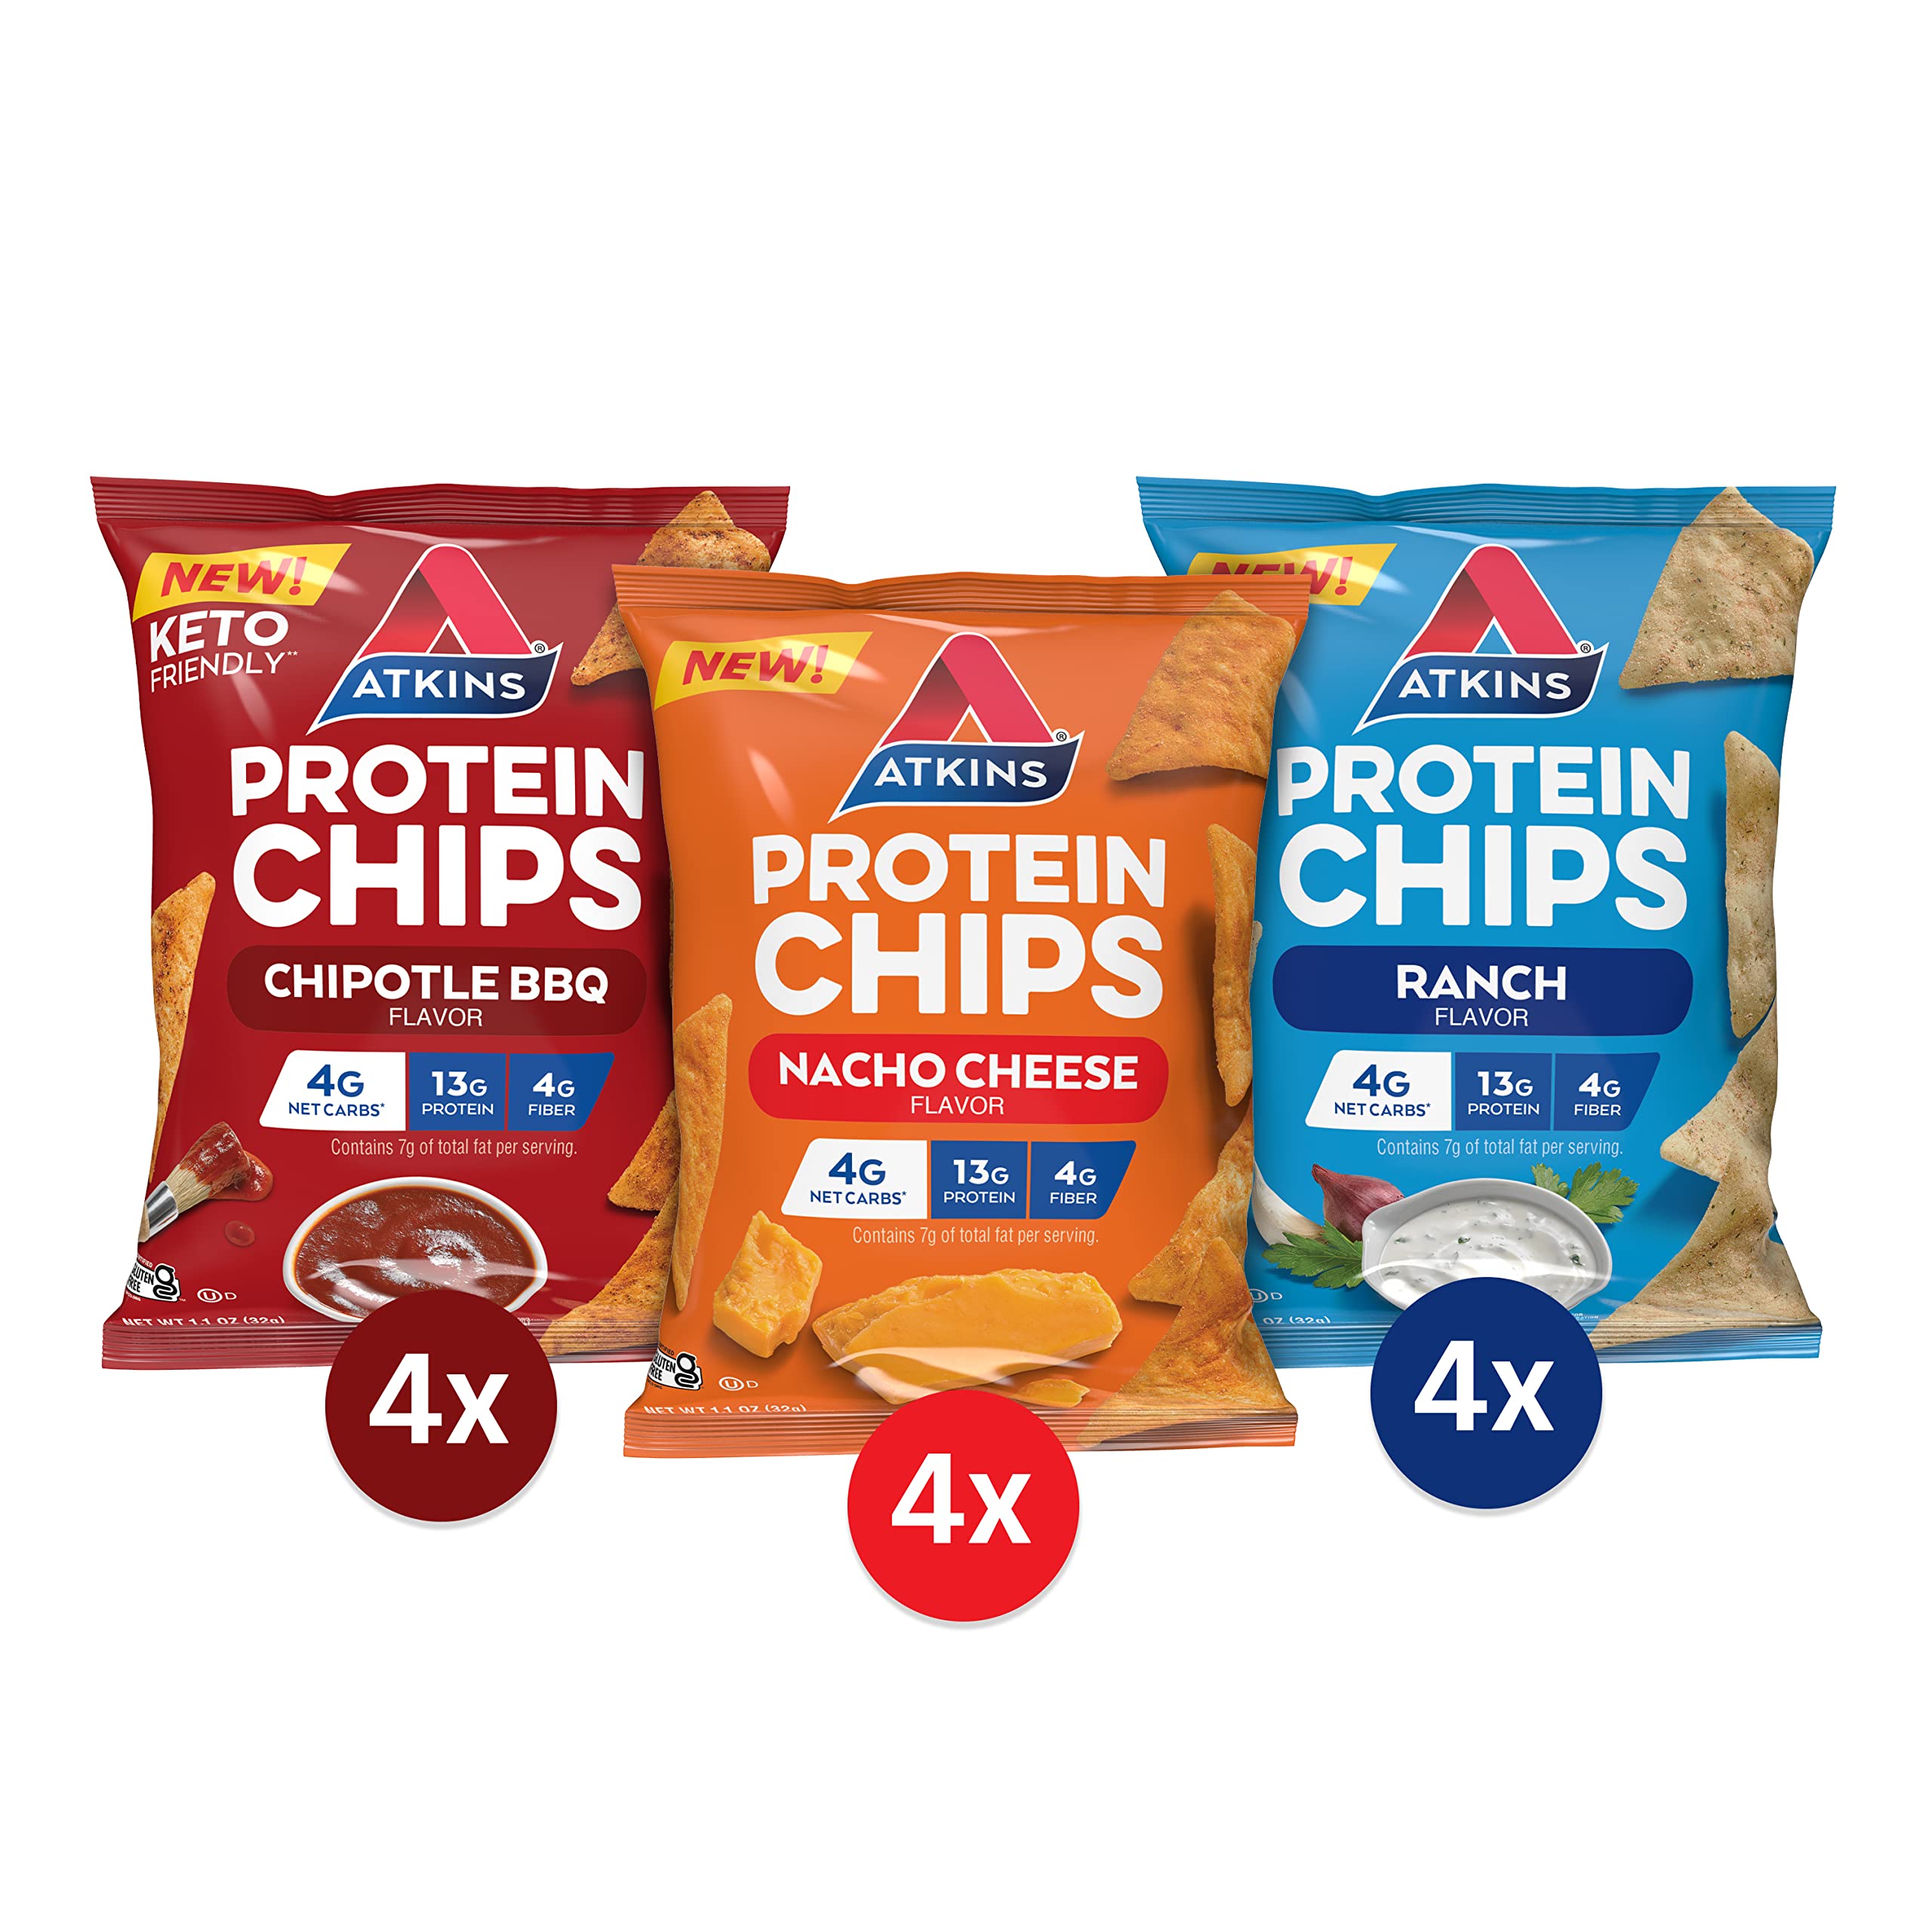 Atkins Protein Chips Variety Pack, 4g Net Carbs, 13g Protein, Gluten Free & Peanut Butter Protein Cookie, Protein Dessert, Rich in Fiber, 3g Net Carb, 1g Sugar, Keto Friendly, 4 Count